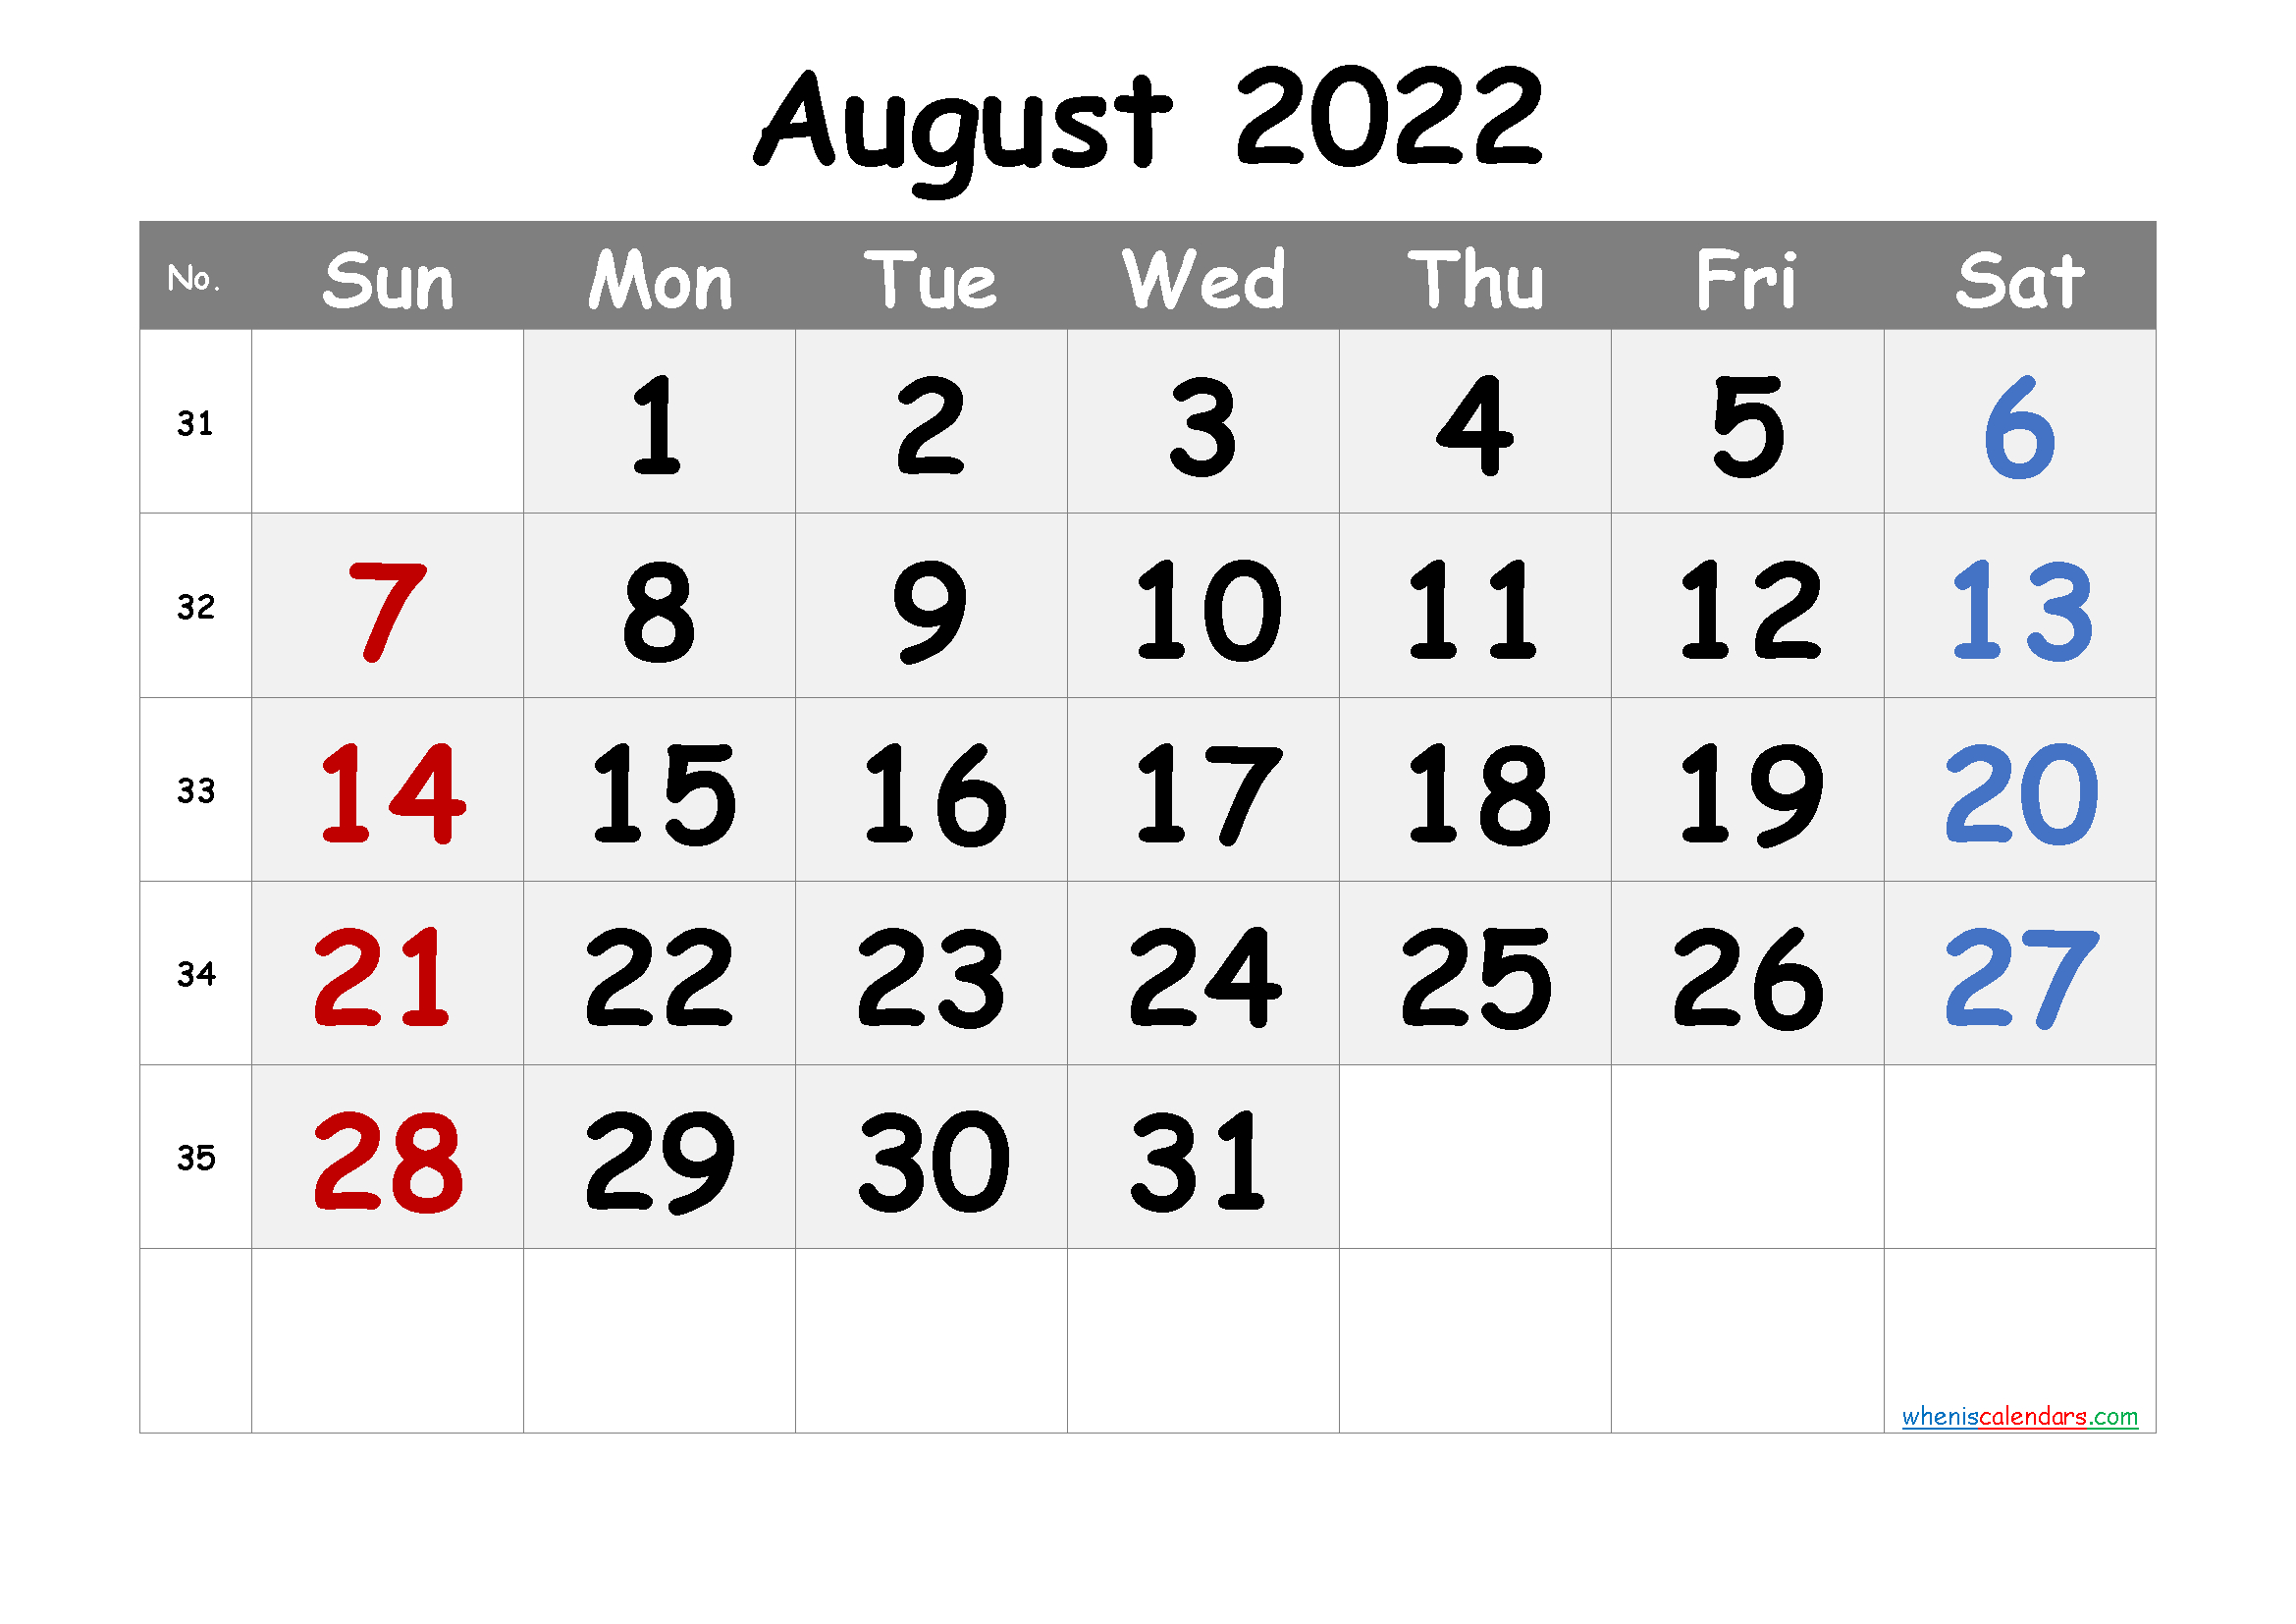 Take Calendar Sept 2021 To August 2022